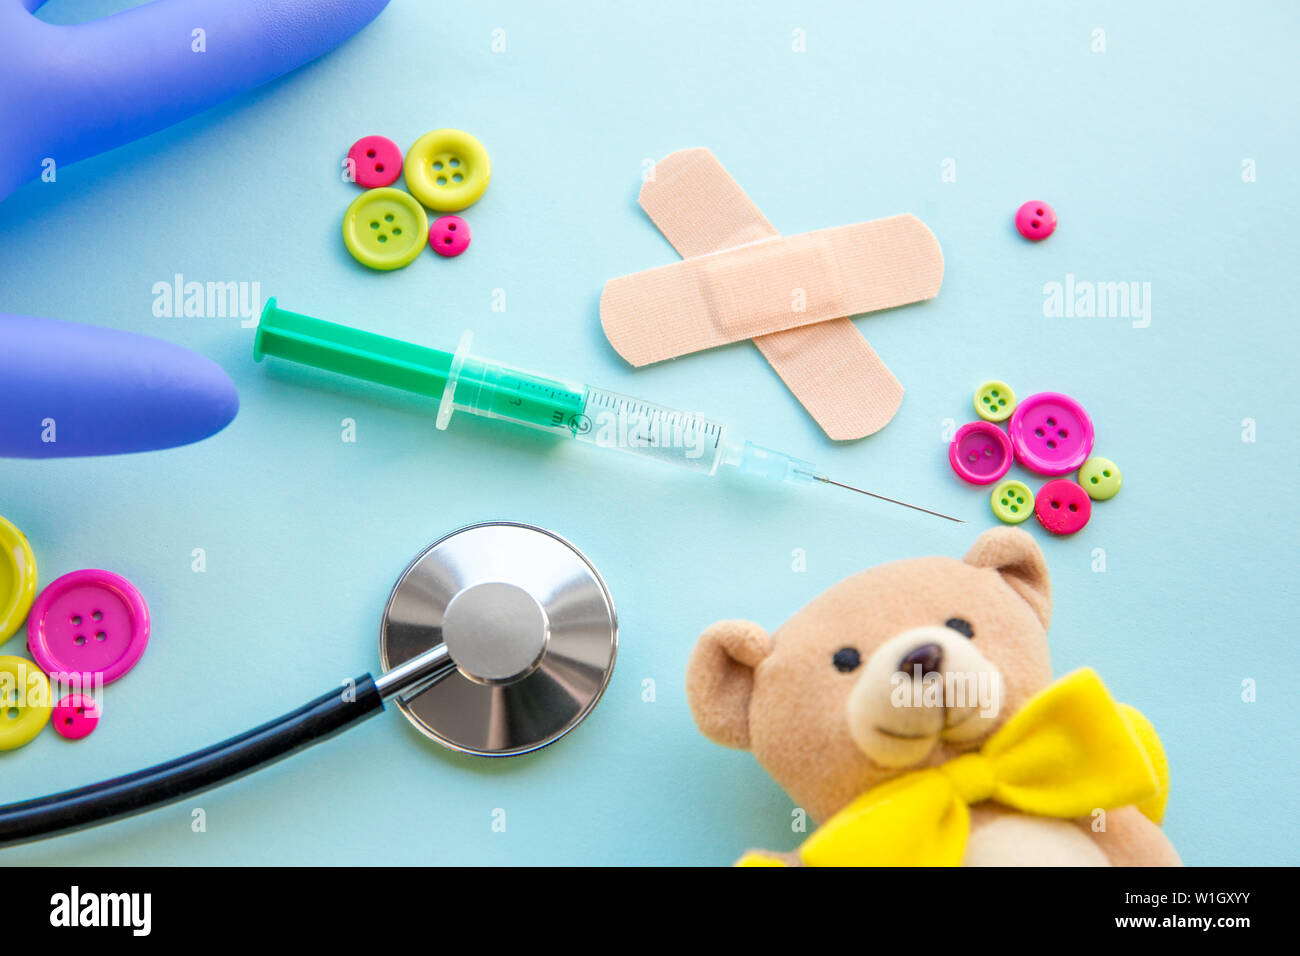 Children's doctor cita varios concepto. Calendario con números, doctor, kids juguetes, botones de rosa y verde. Plana Vista laical. Foto de stock